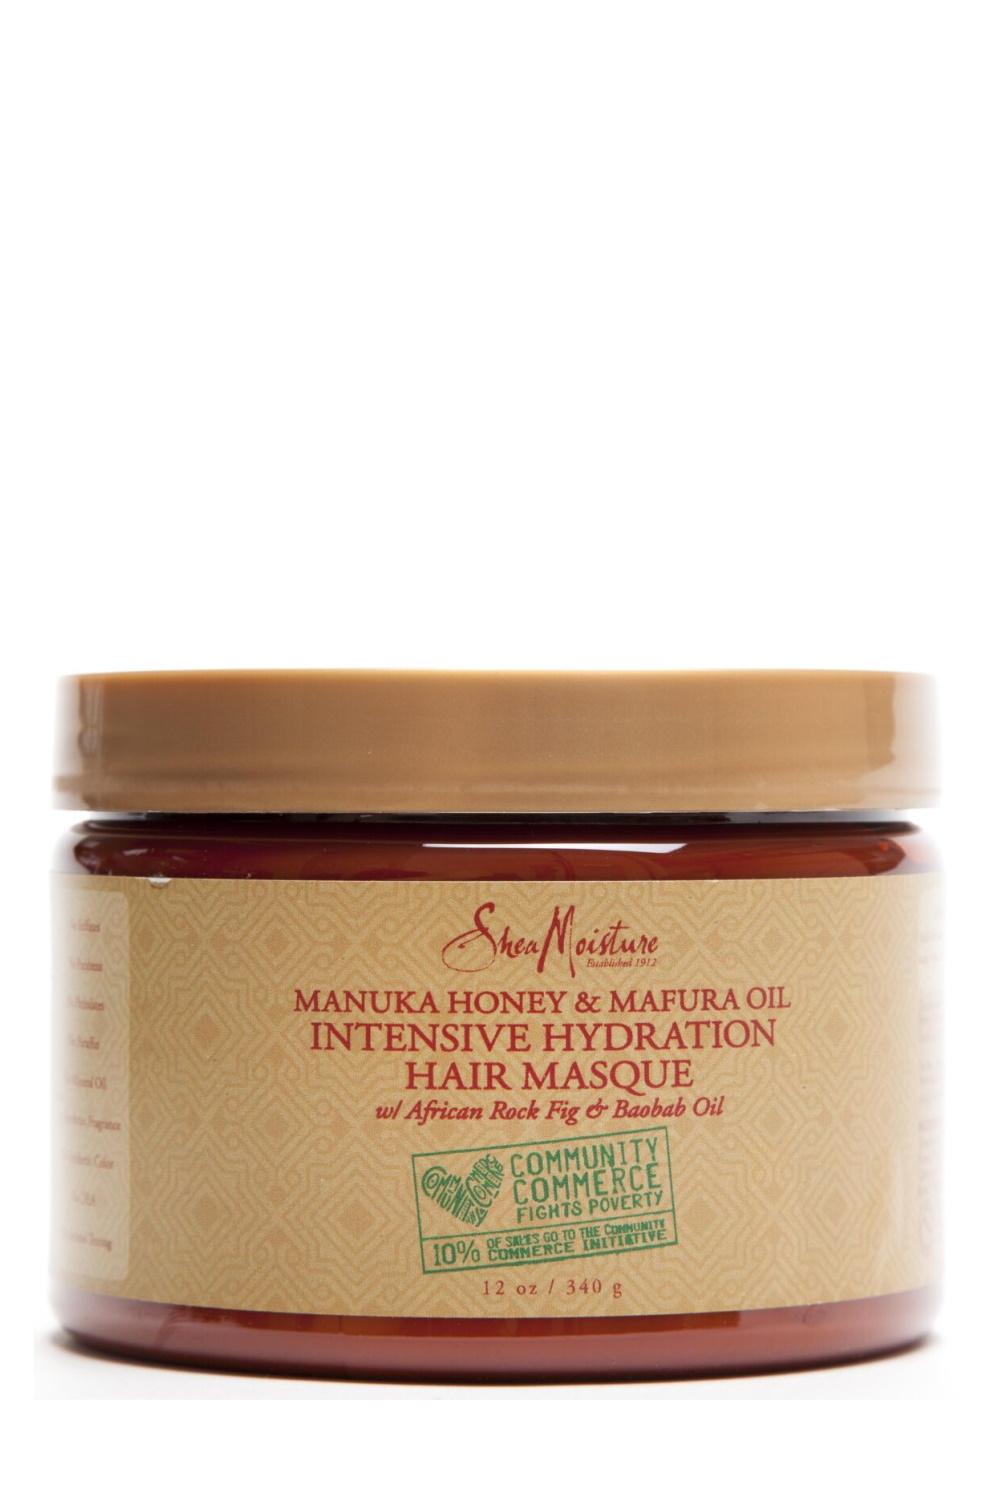 Manuka Honey & Mafura Oil Intensive Hydration Hair Masque